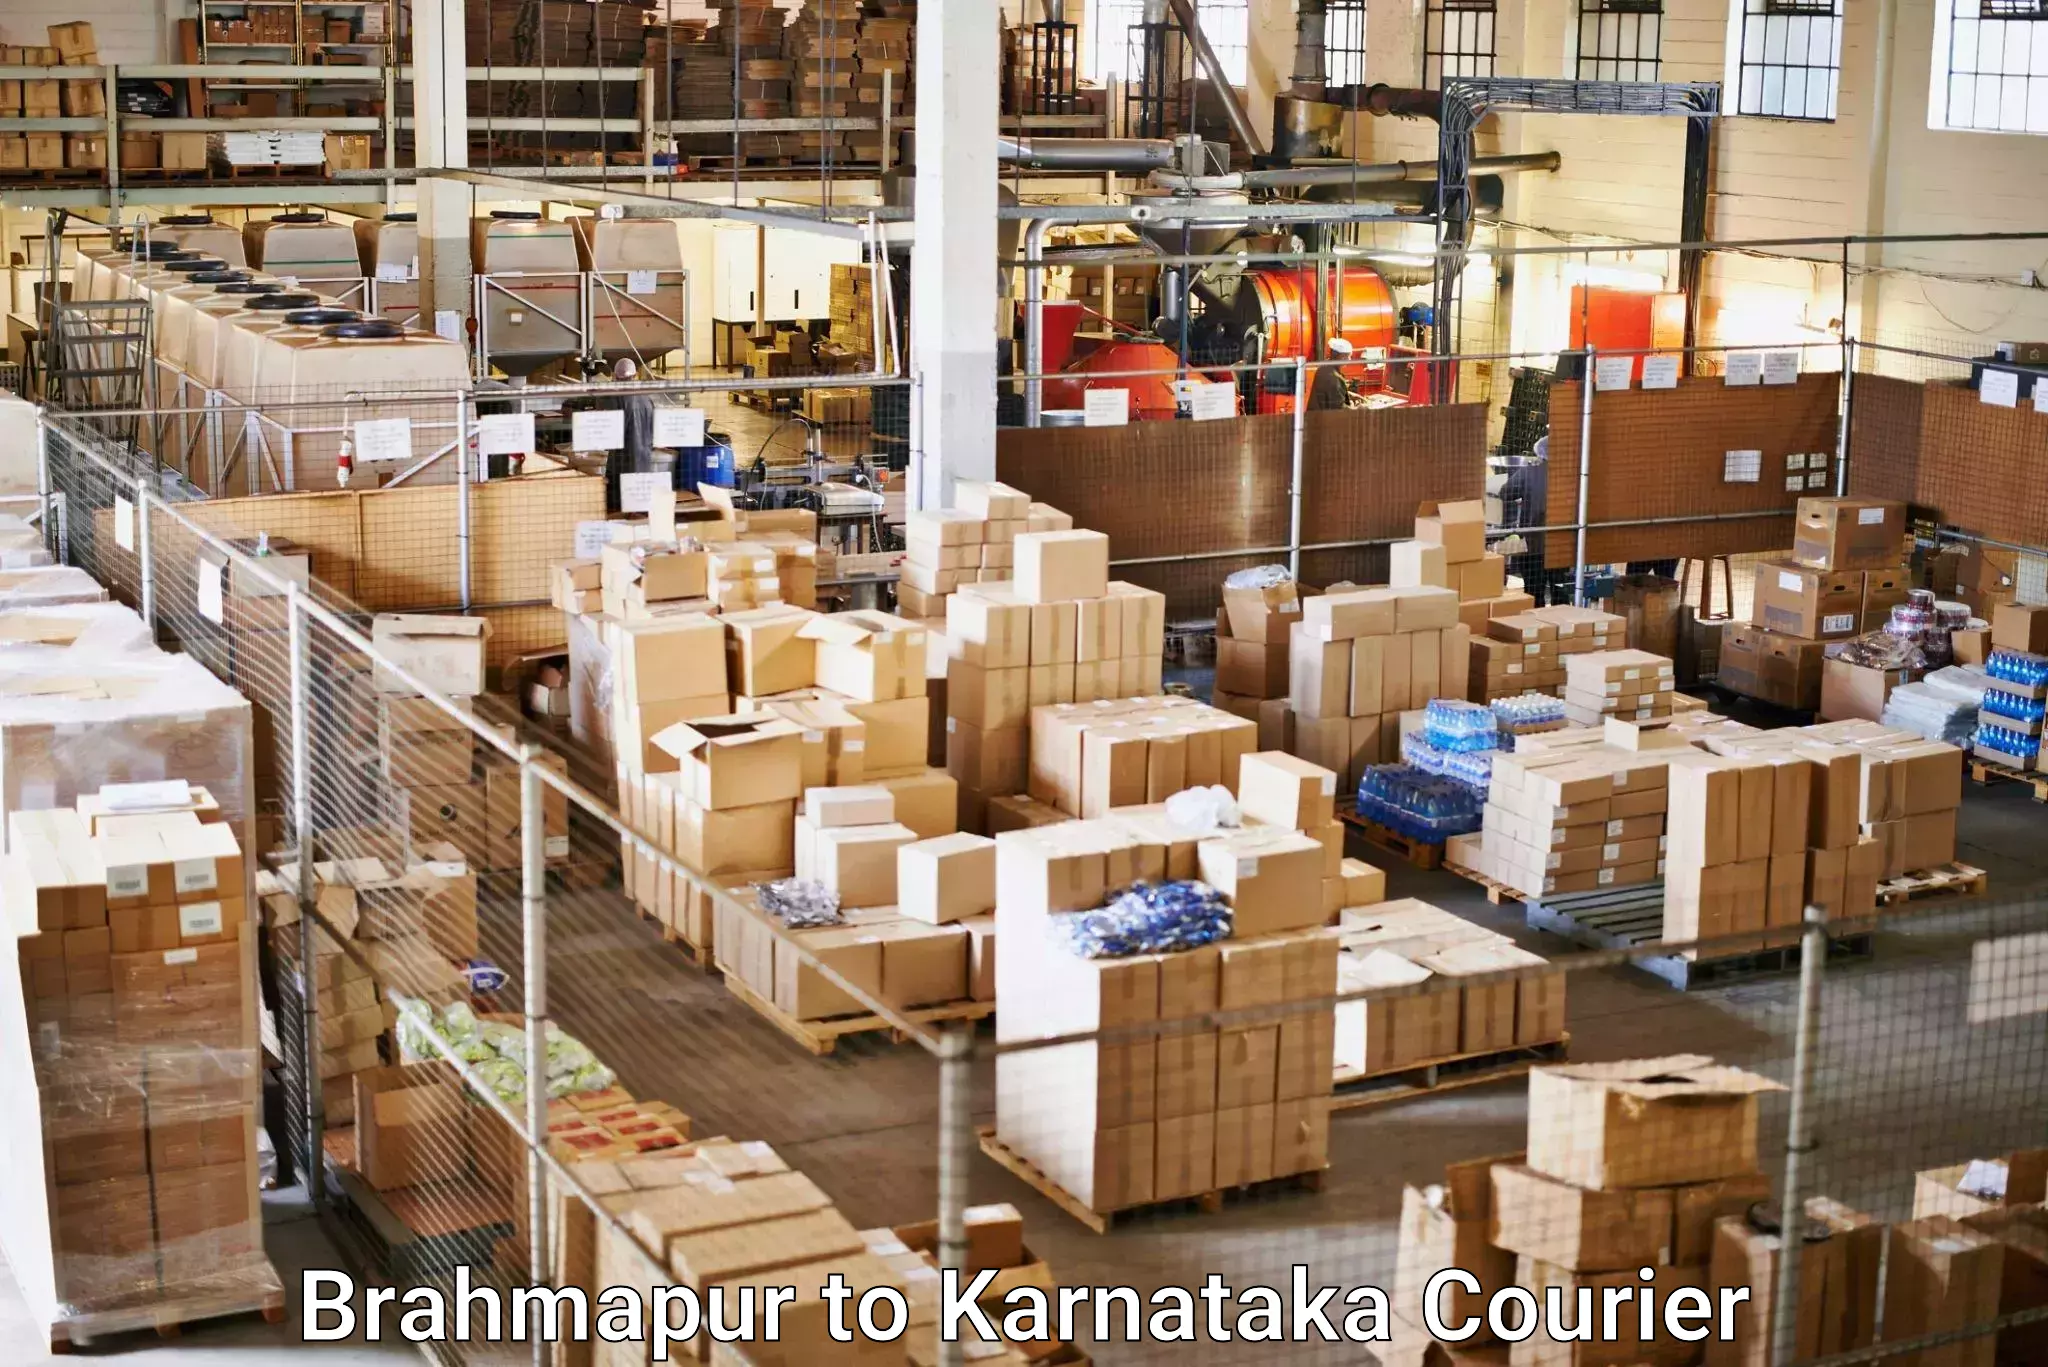 Digital shipping tools Brahmapur to Karnataka